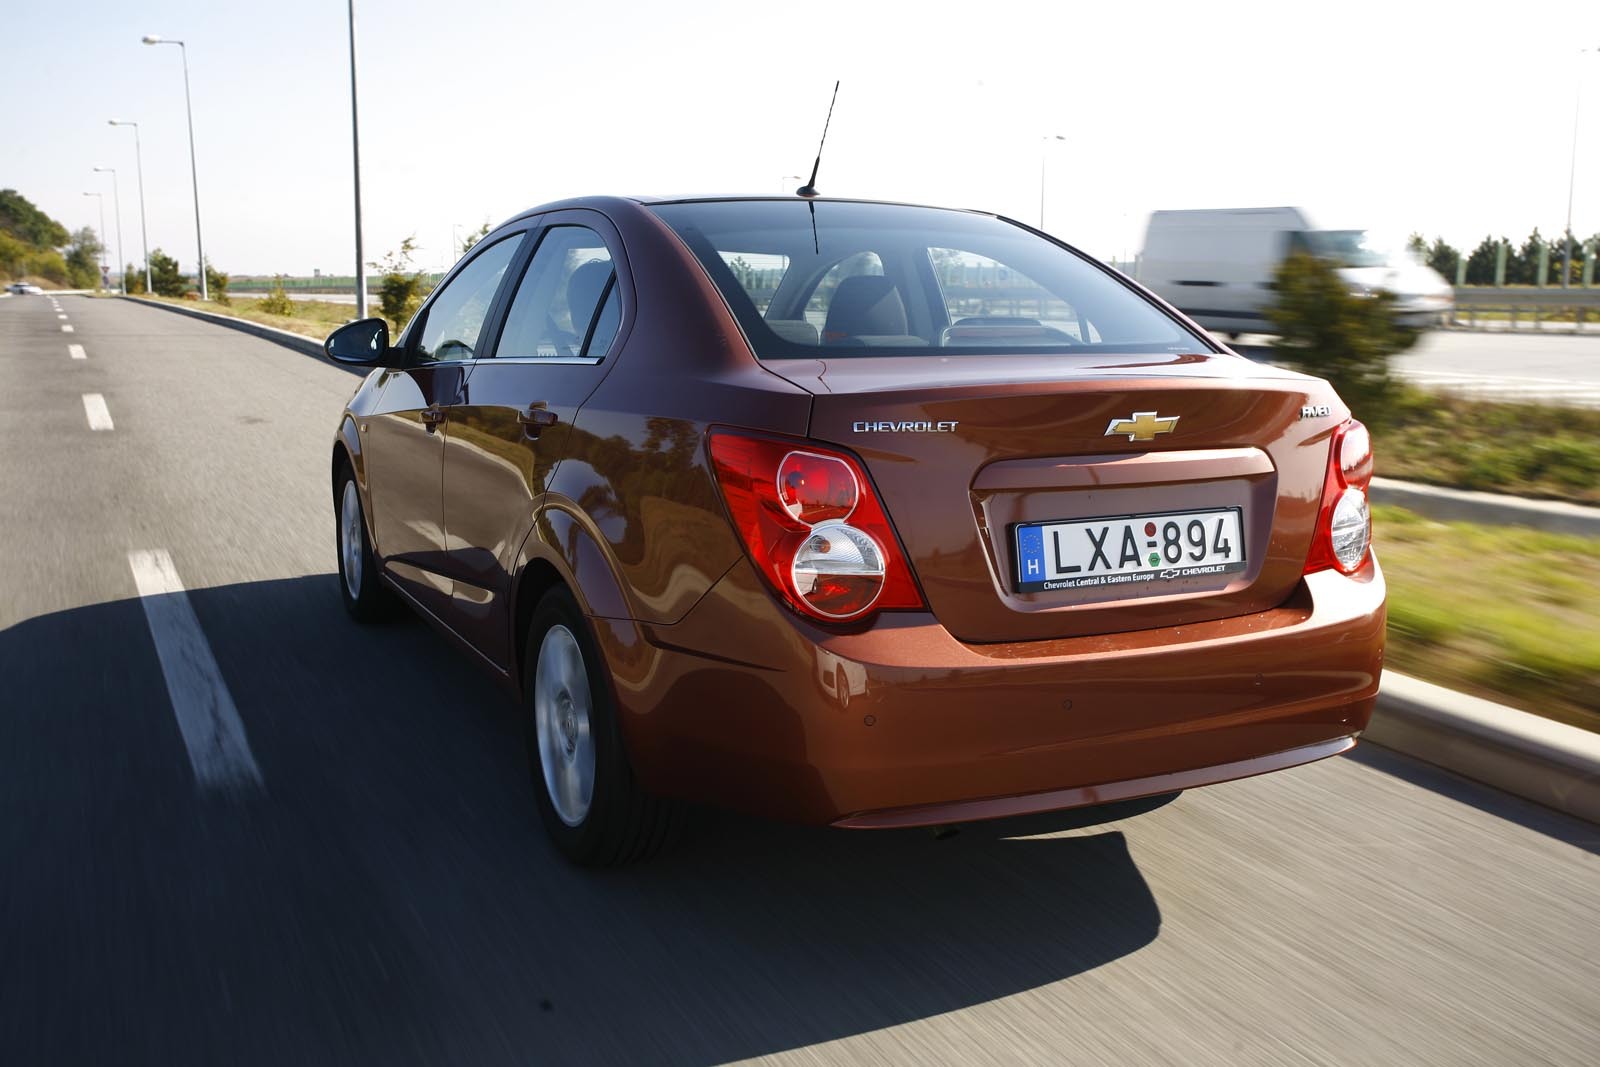 Chevrolet Aveo 1.6 AT6 - in regim de autostrada, la 130 km/h, consuma cam 8 litri/100 km